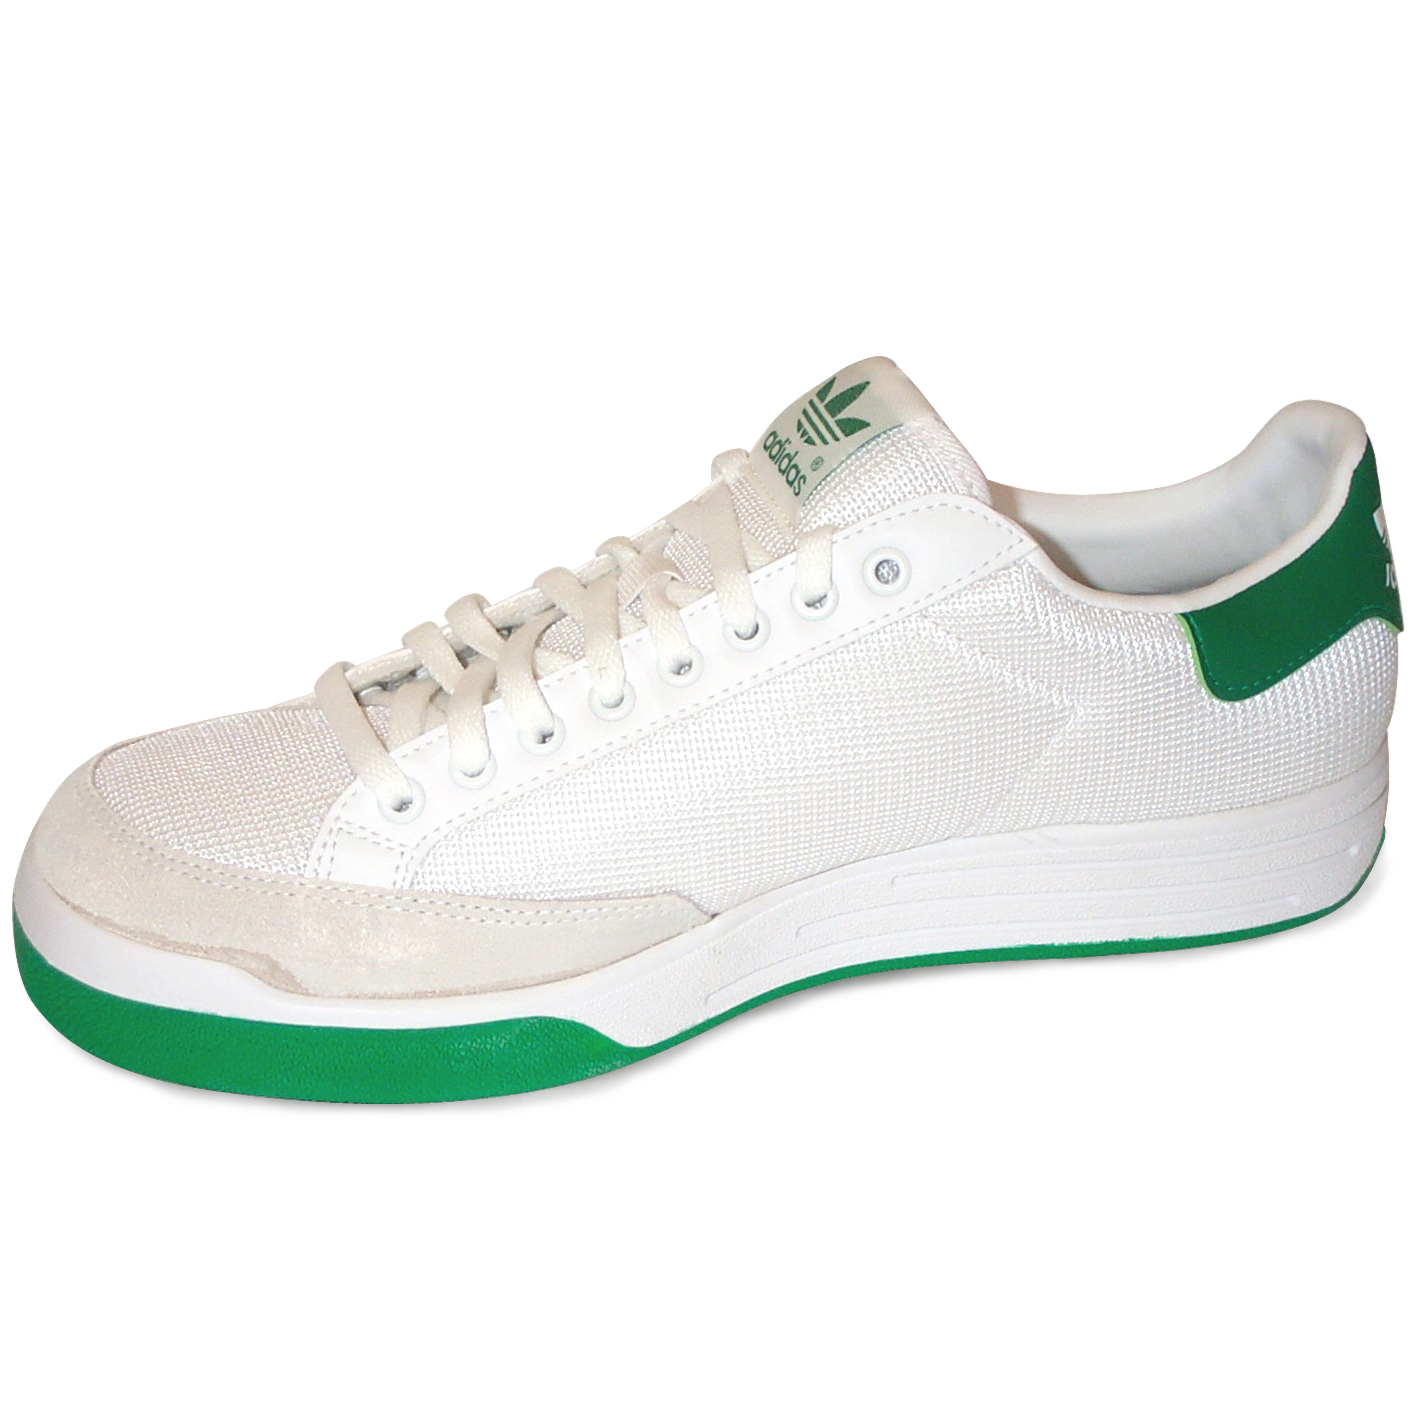 confesar Tomar un baño capacidad Adidas Rod Laver Super Tennis Shoes – White/Green | World Footbag